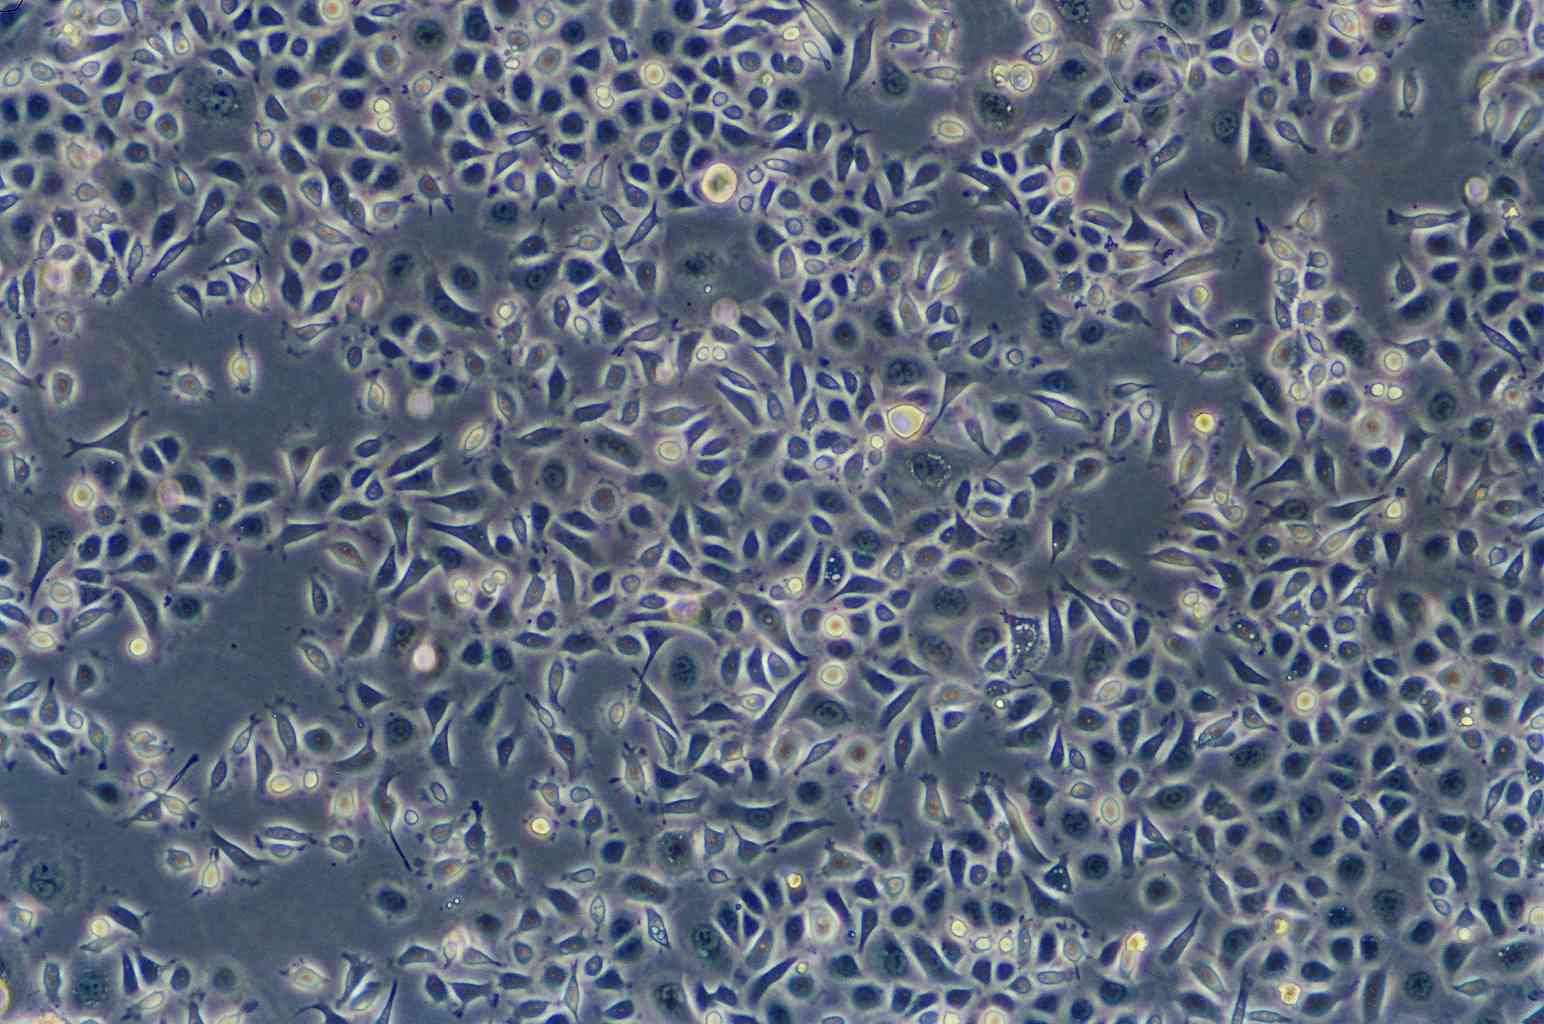 RMC-1 cell line大鼠视网膜Muller细胞系,RMC-1 cell line